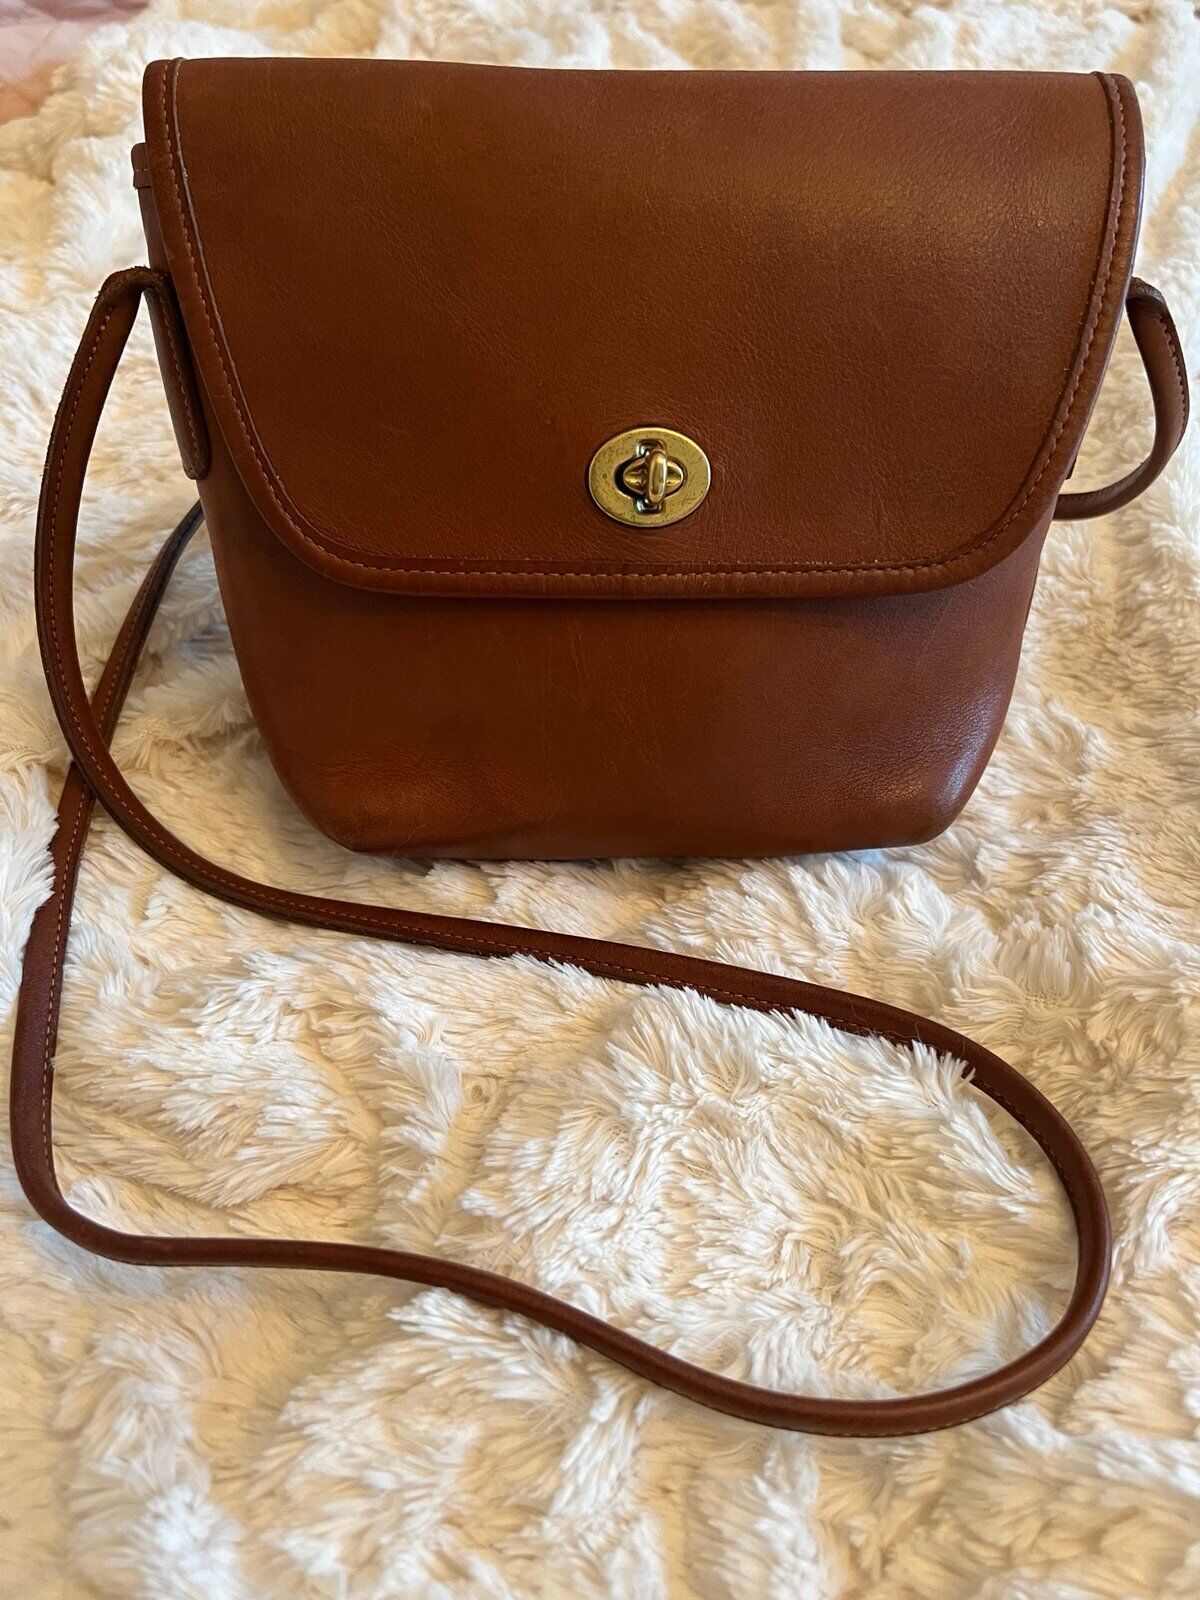 Vintage Quincy Coach Brown Leather Bag